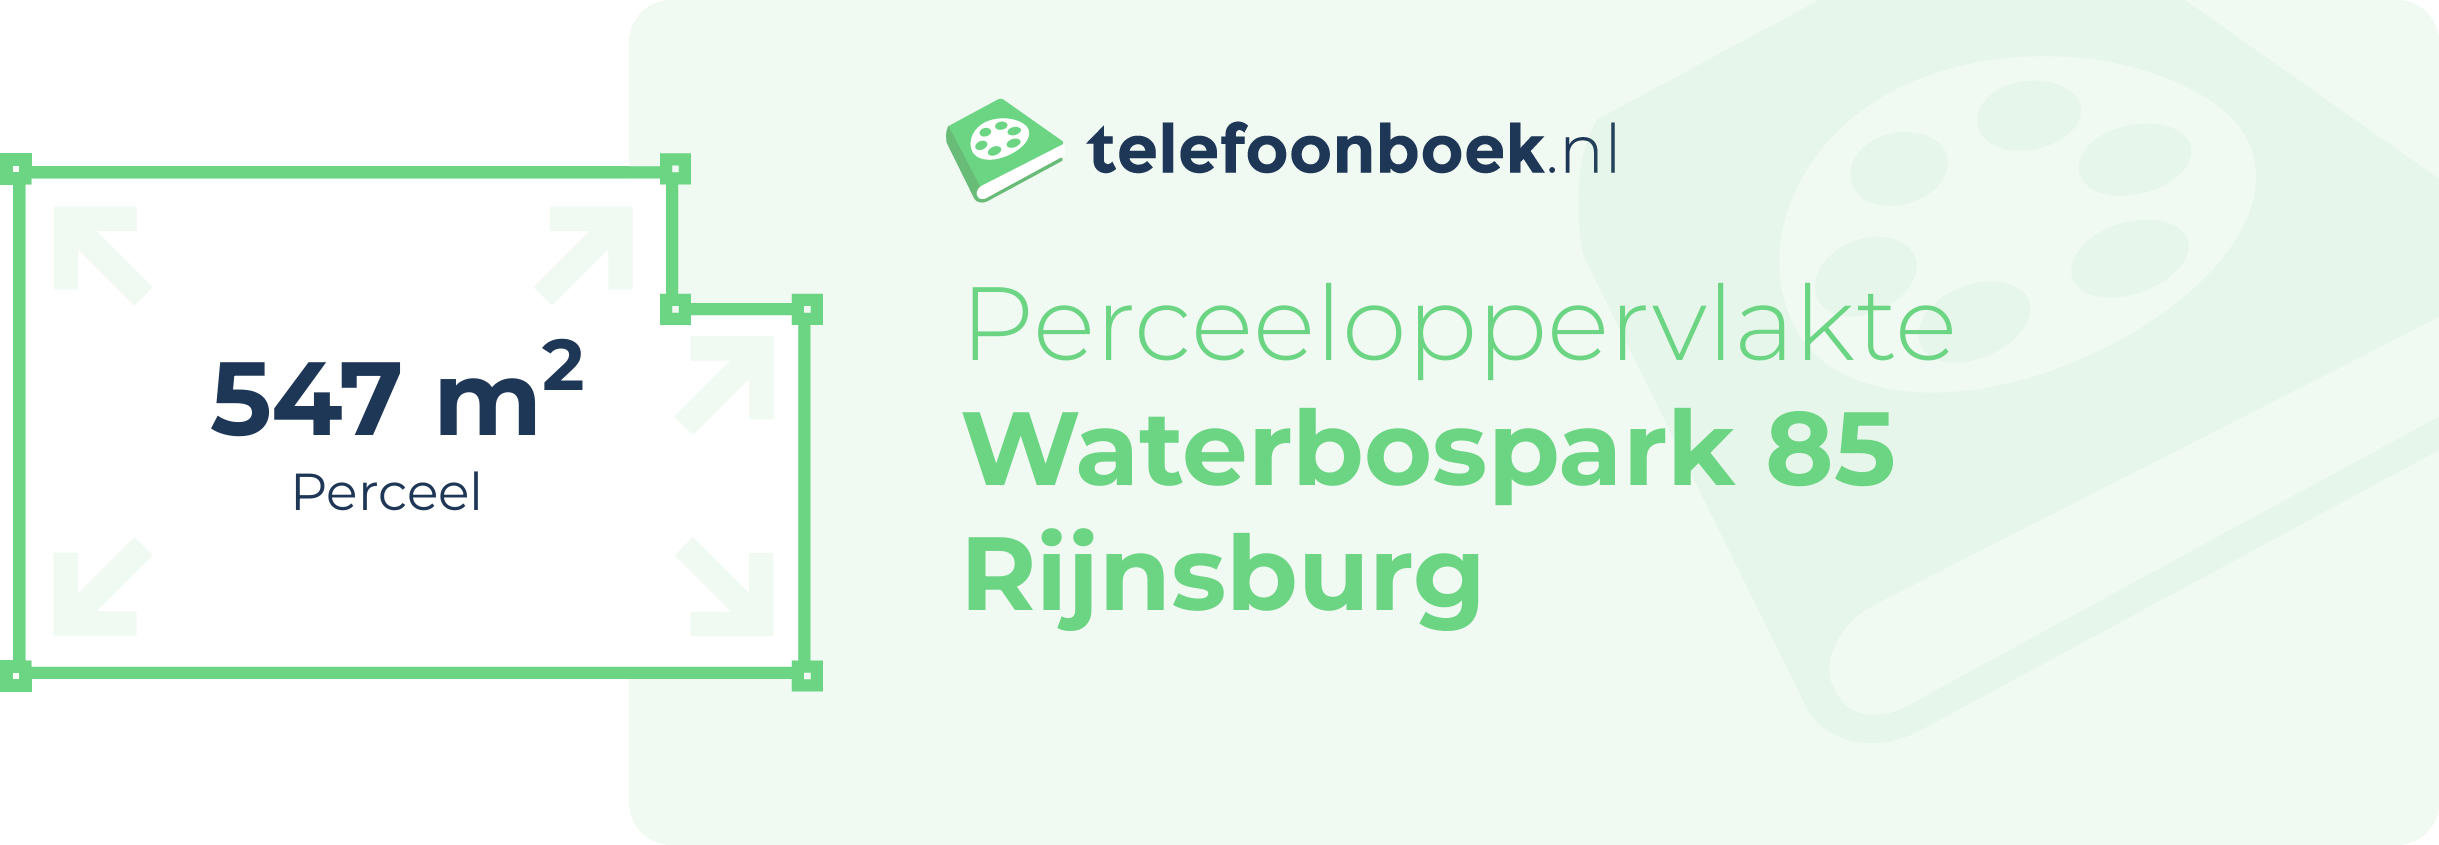 Perceeloppervlakte Waterbospark 85 Rijnsburg